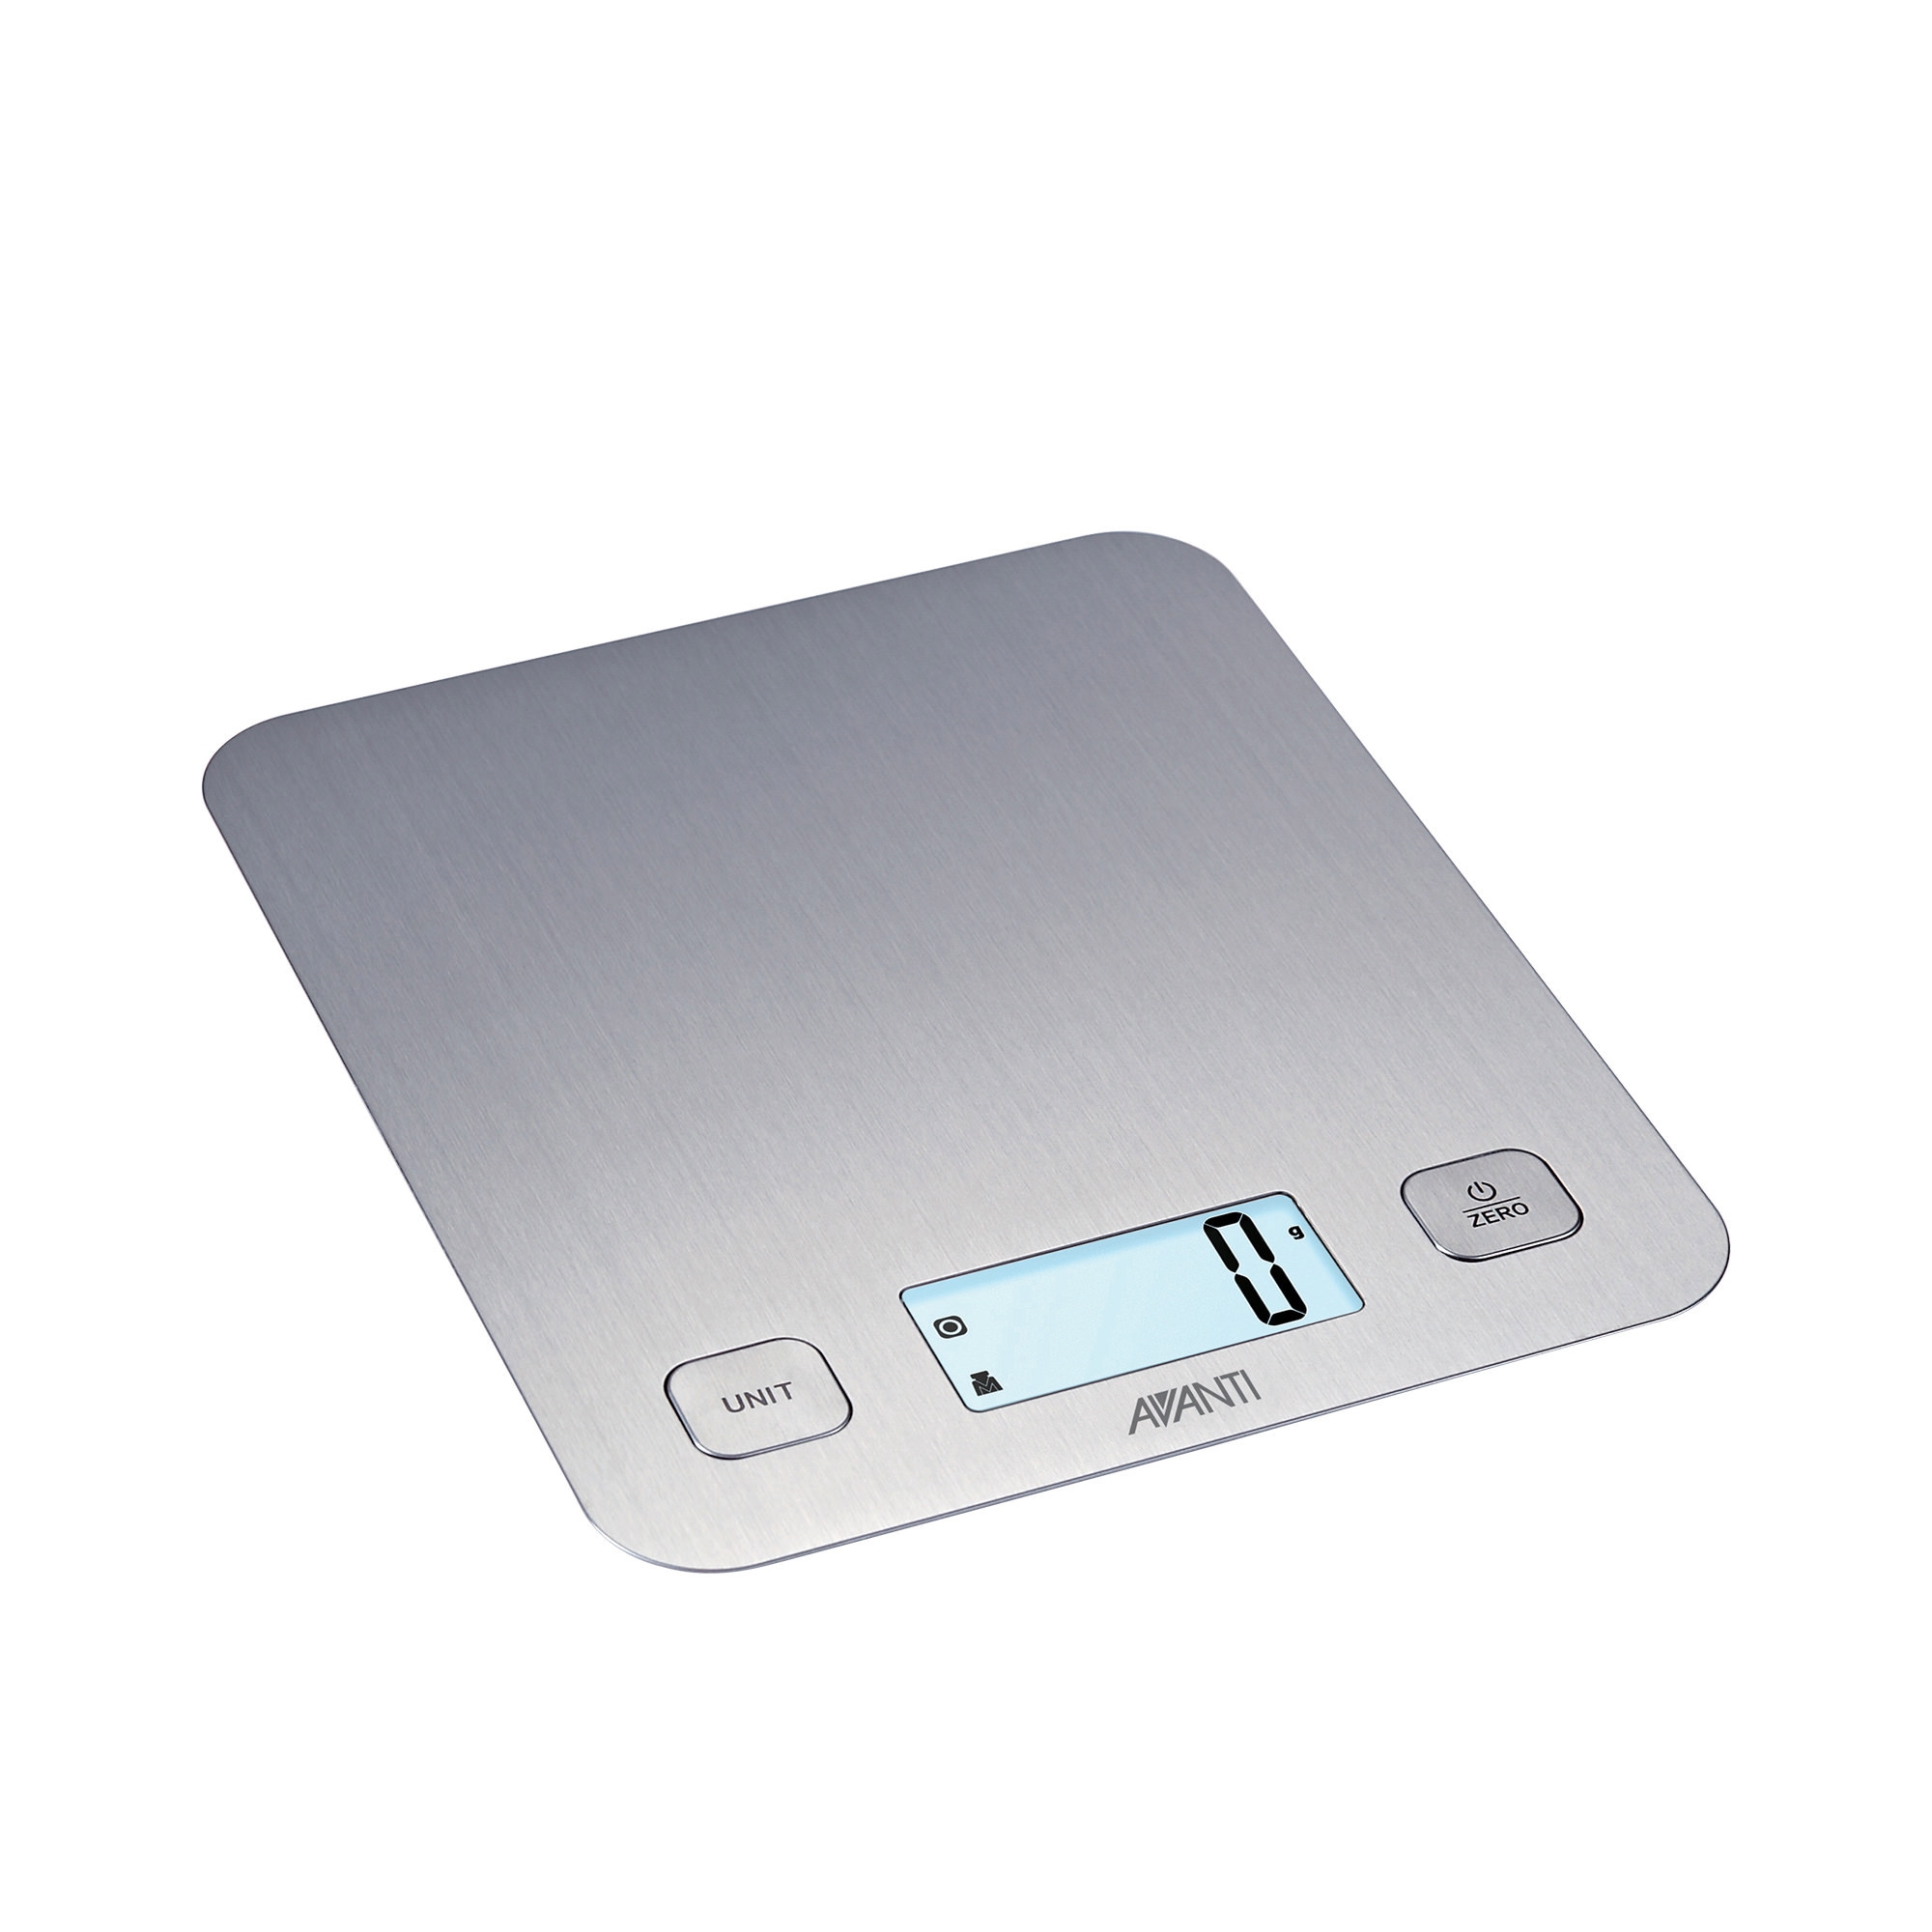 Avanti Digital Kitchen Scale Slim 5kg Stainless Steel Image 1